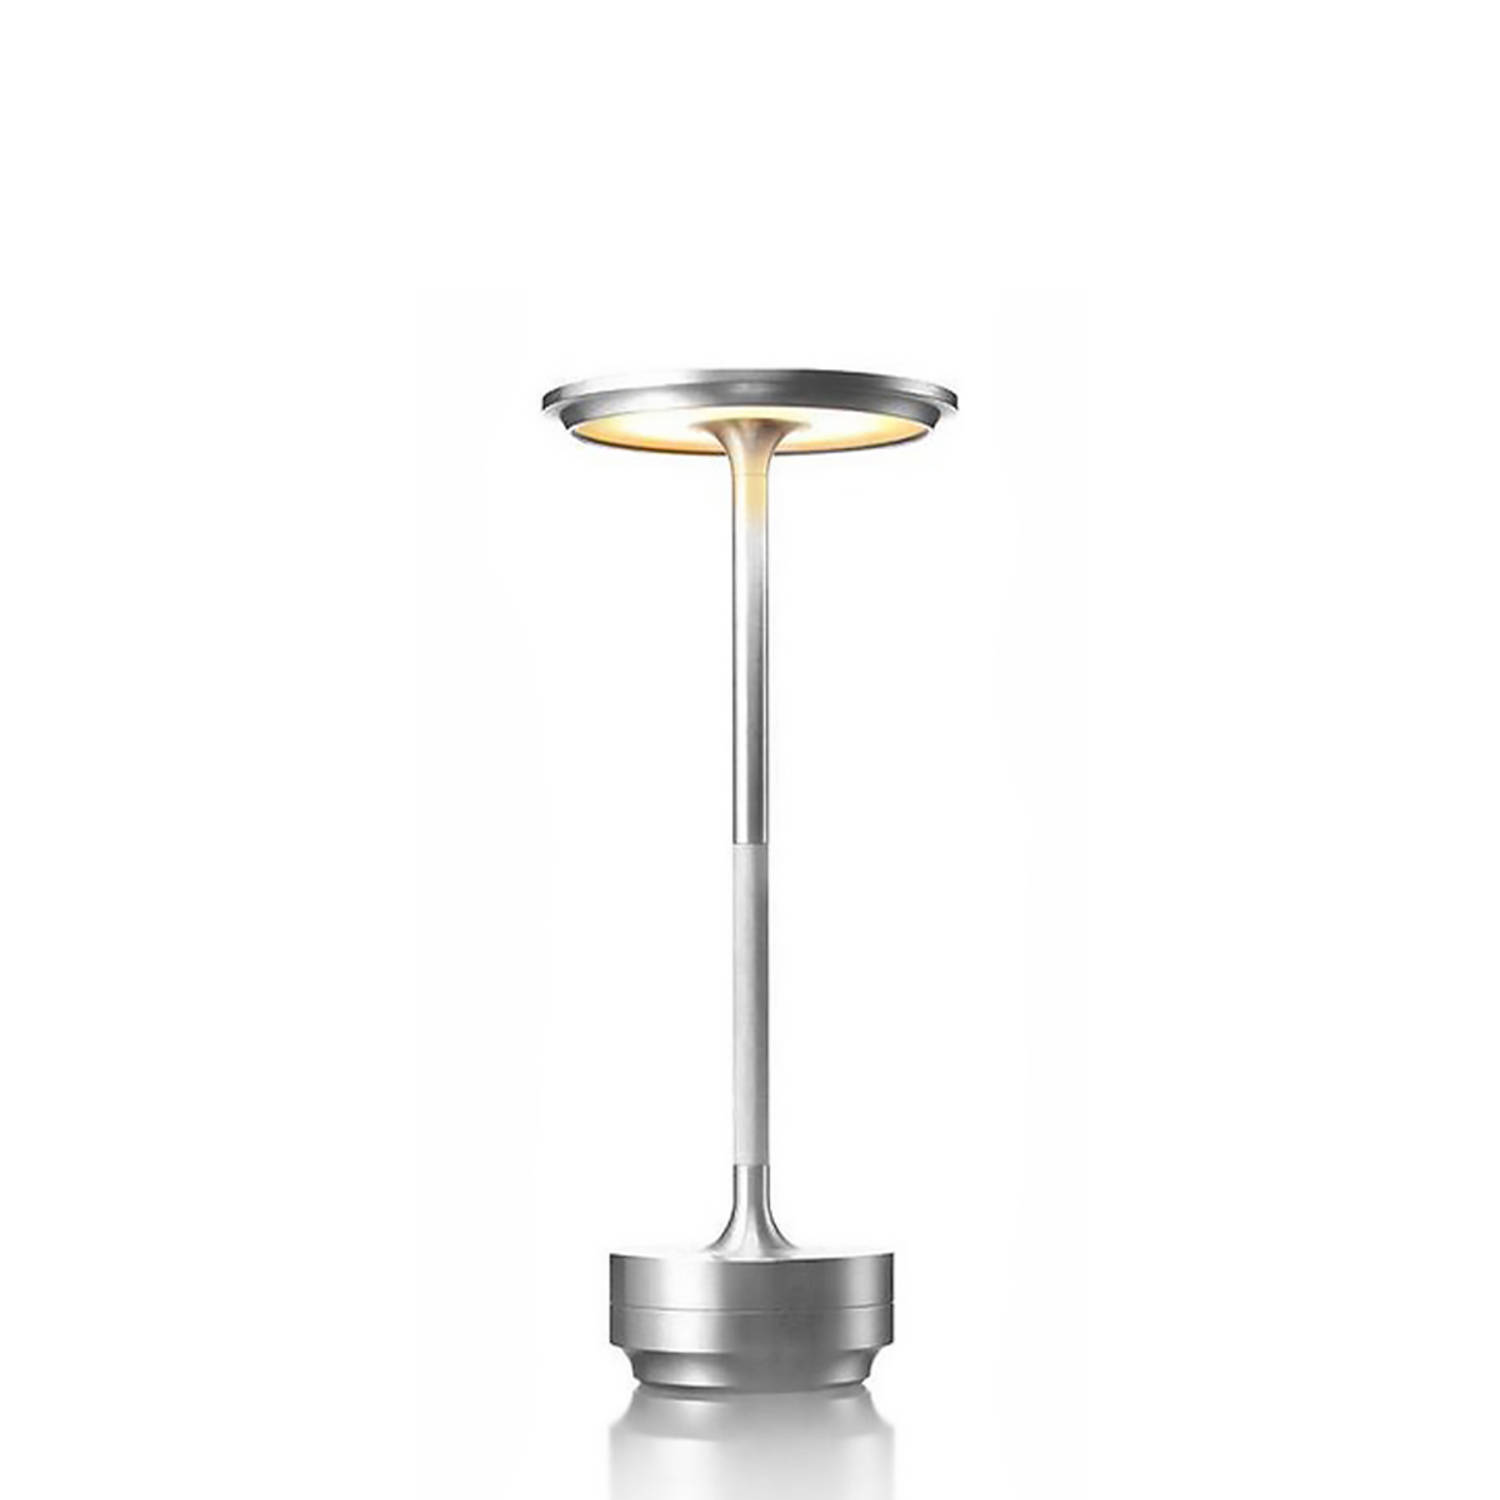 Goliving Tafellamp Op Accu - Oplaadbaar en Dimbaar - Spatwaterbestendig - Past in ieder interieur - Energiezuinig - Hoogte 27 cm - Zilver